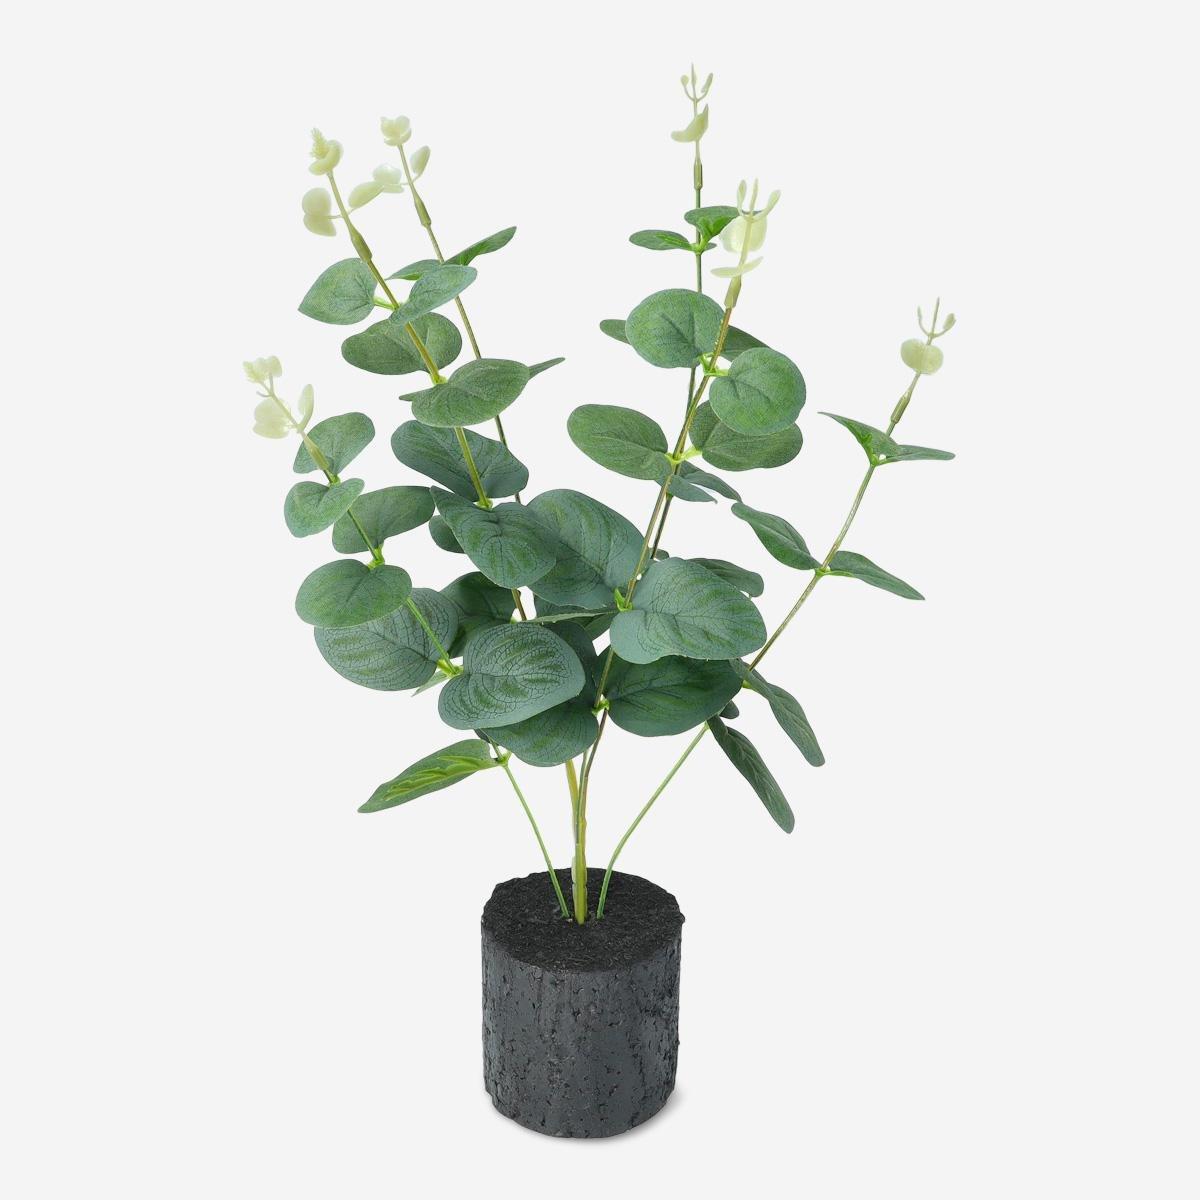 Green decorative plant